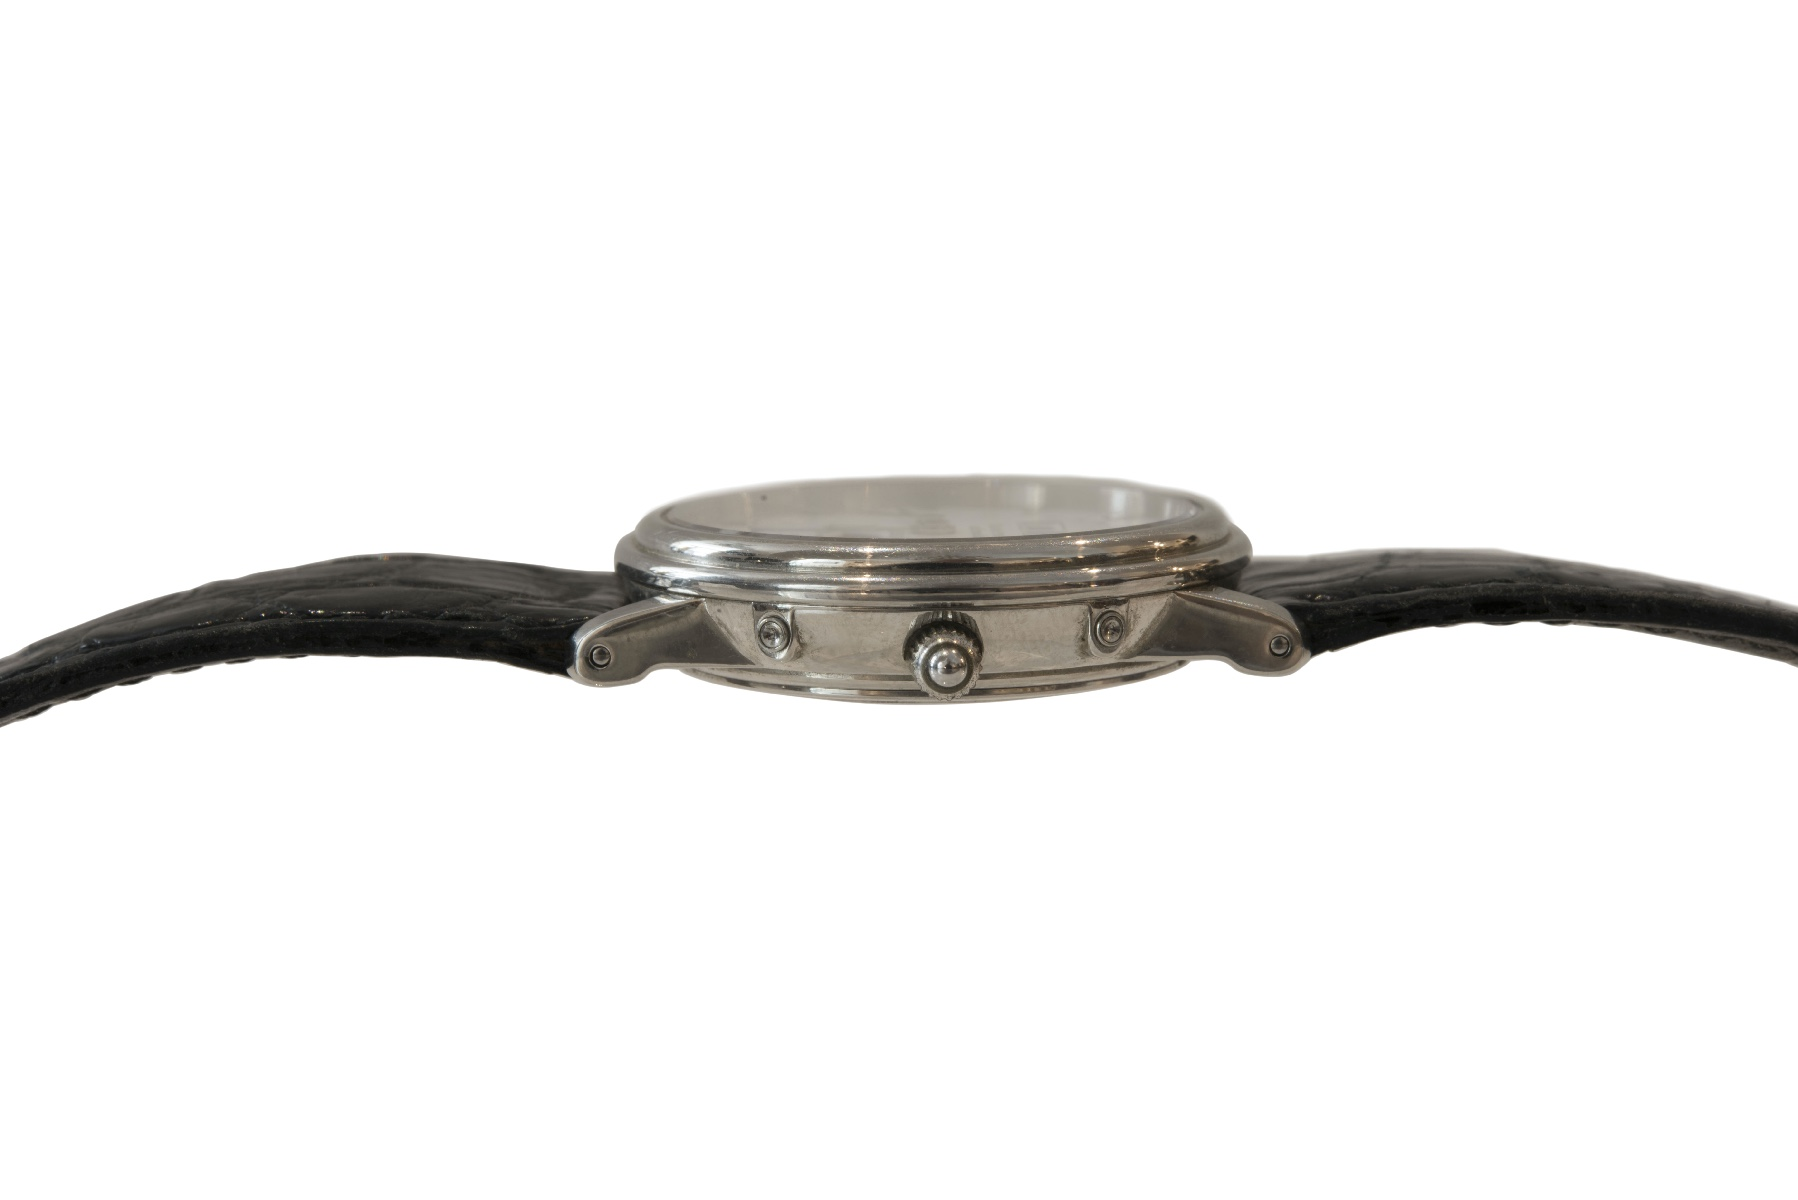 Blancpain Villeret, Armbanduhr | Blancpain Villeret, Wrist Watch - Image 5 of 5